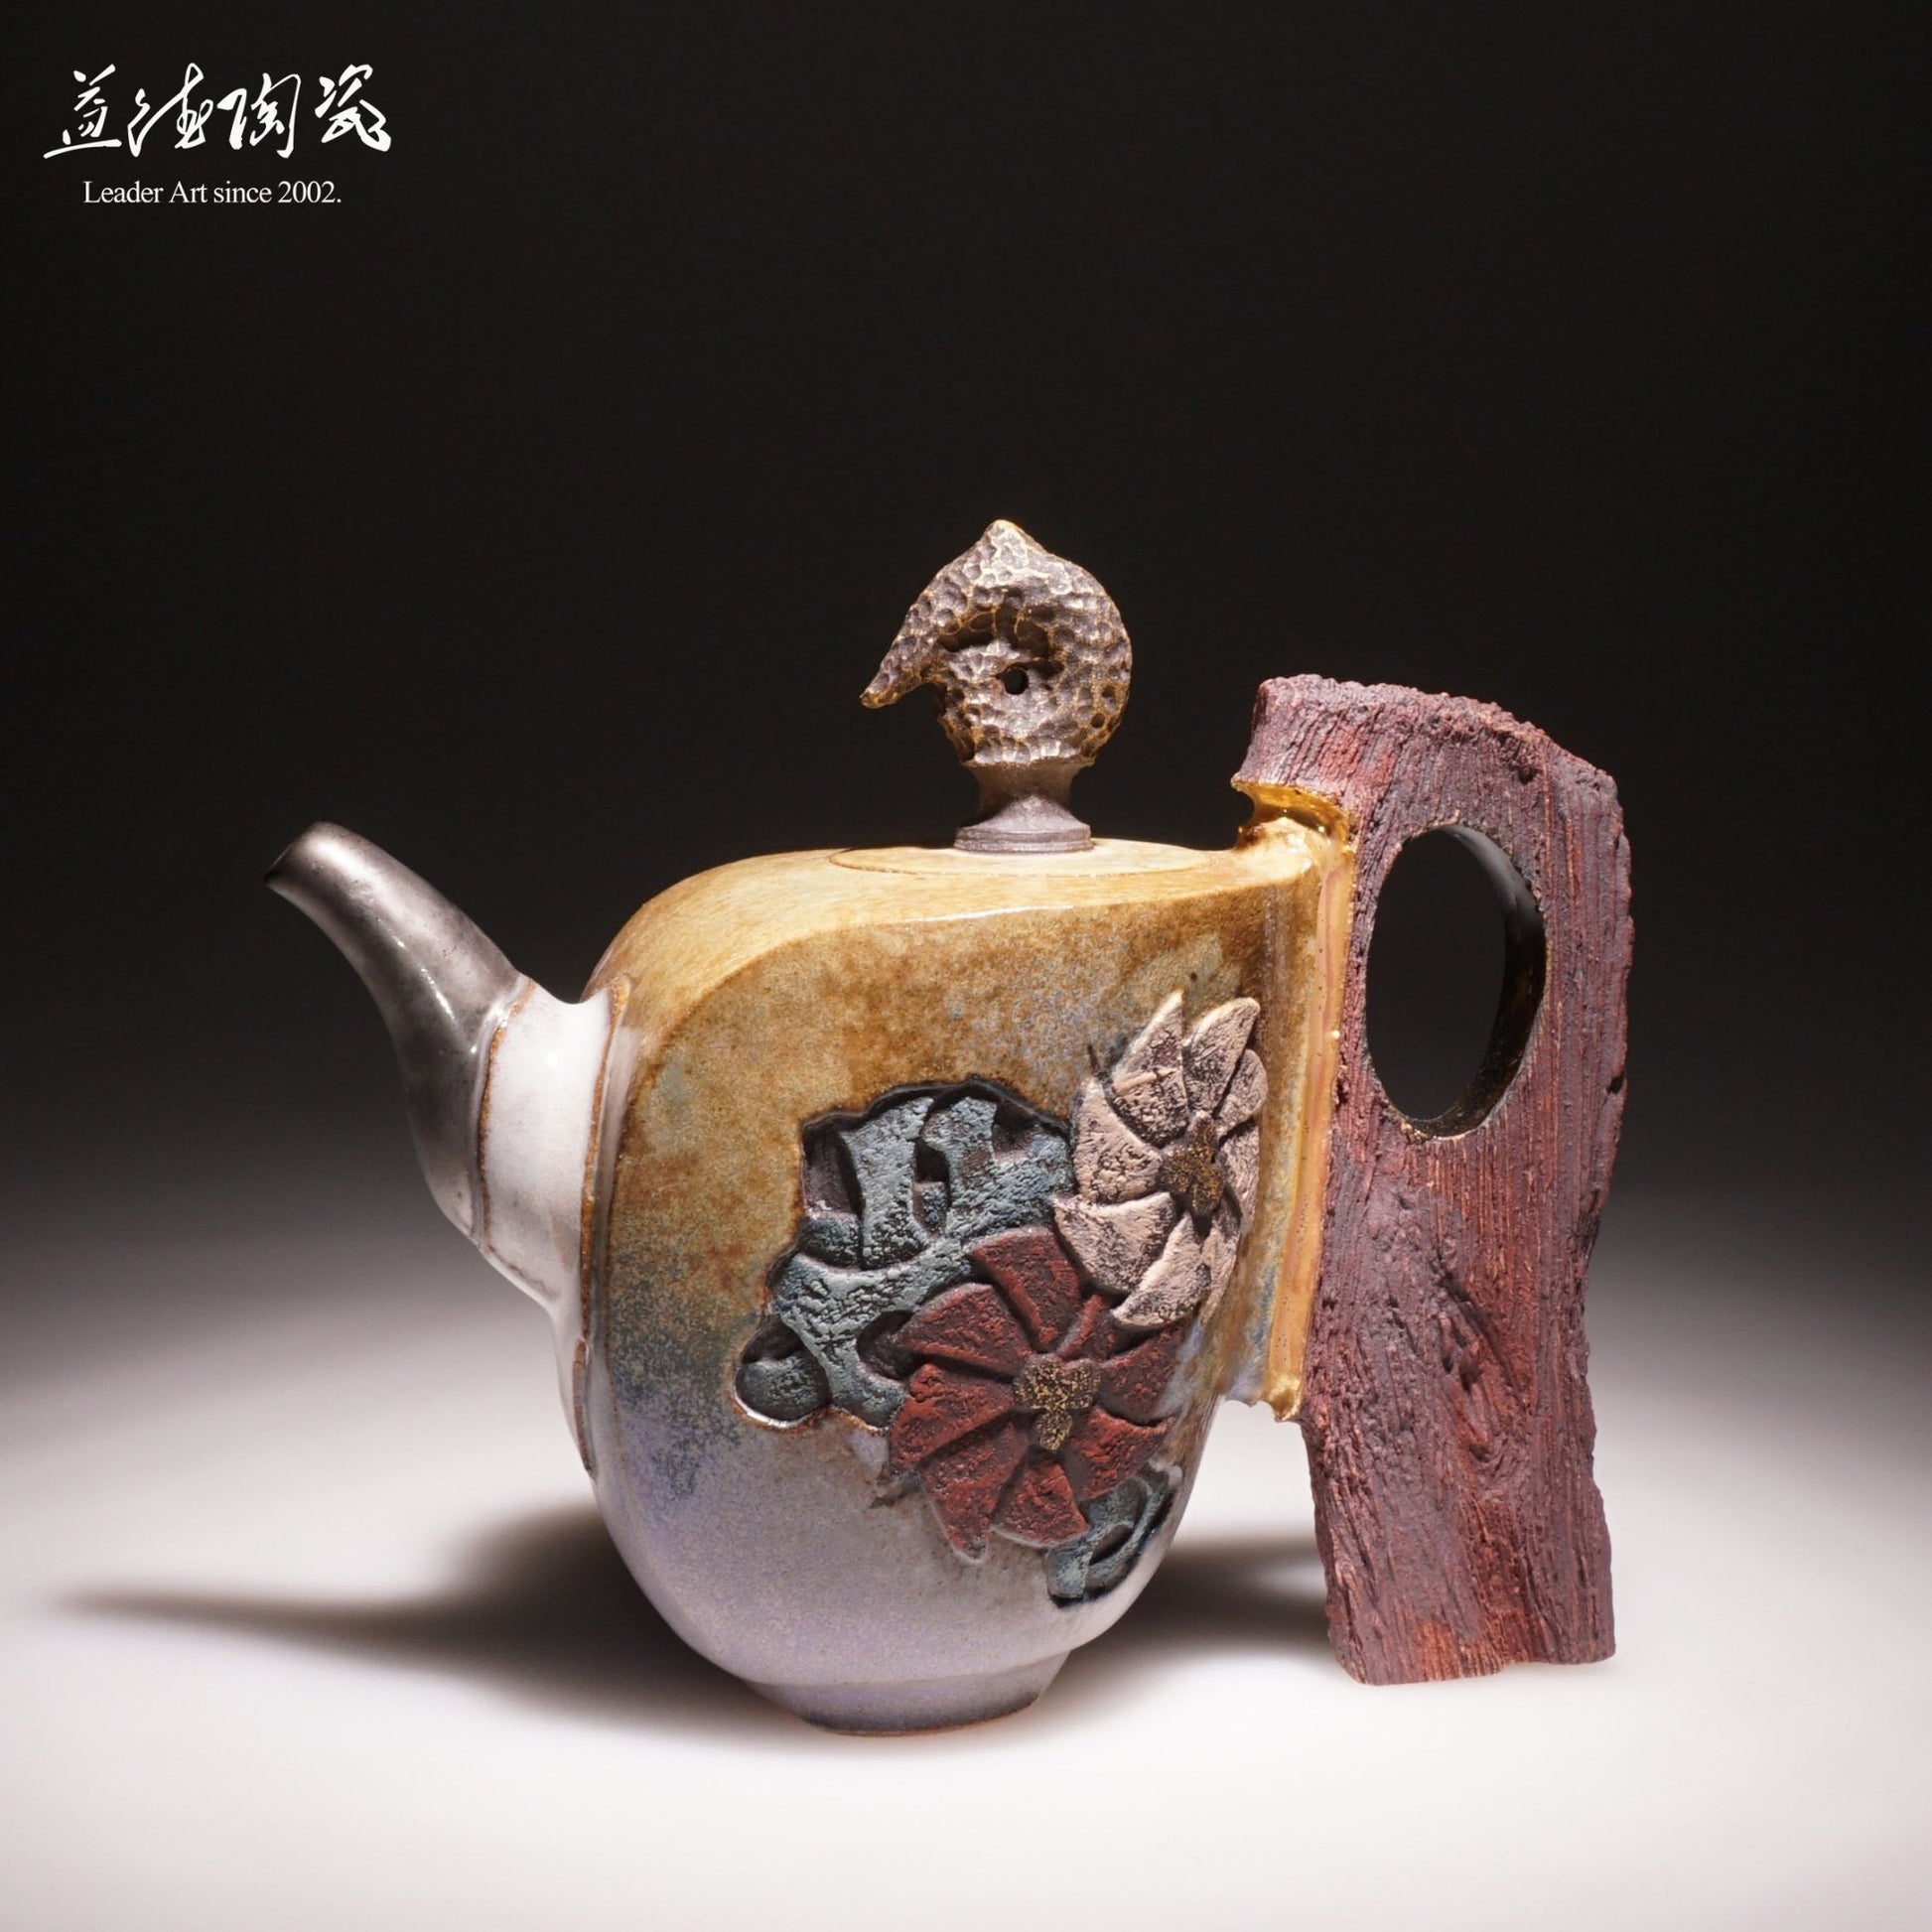 Black stone / Spin - Taiwan International Gold Teapot Prizes - LEADER 益德 | 居家設計藝品・人文茶器・空間美學作品